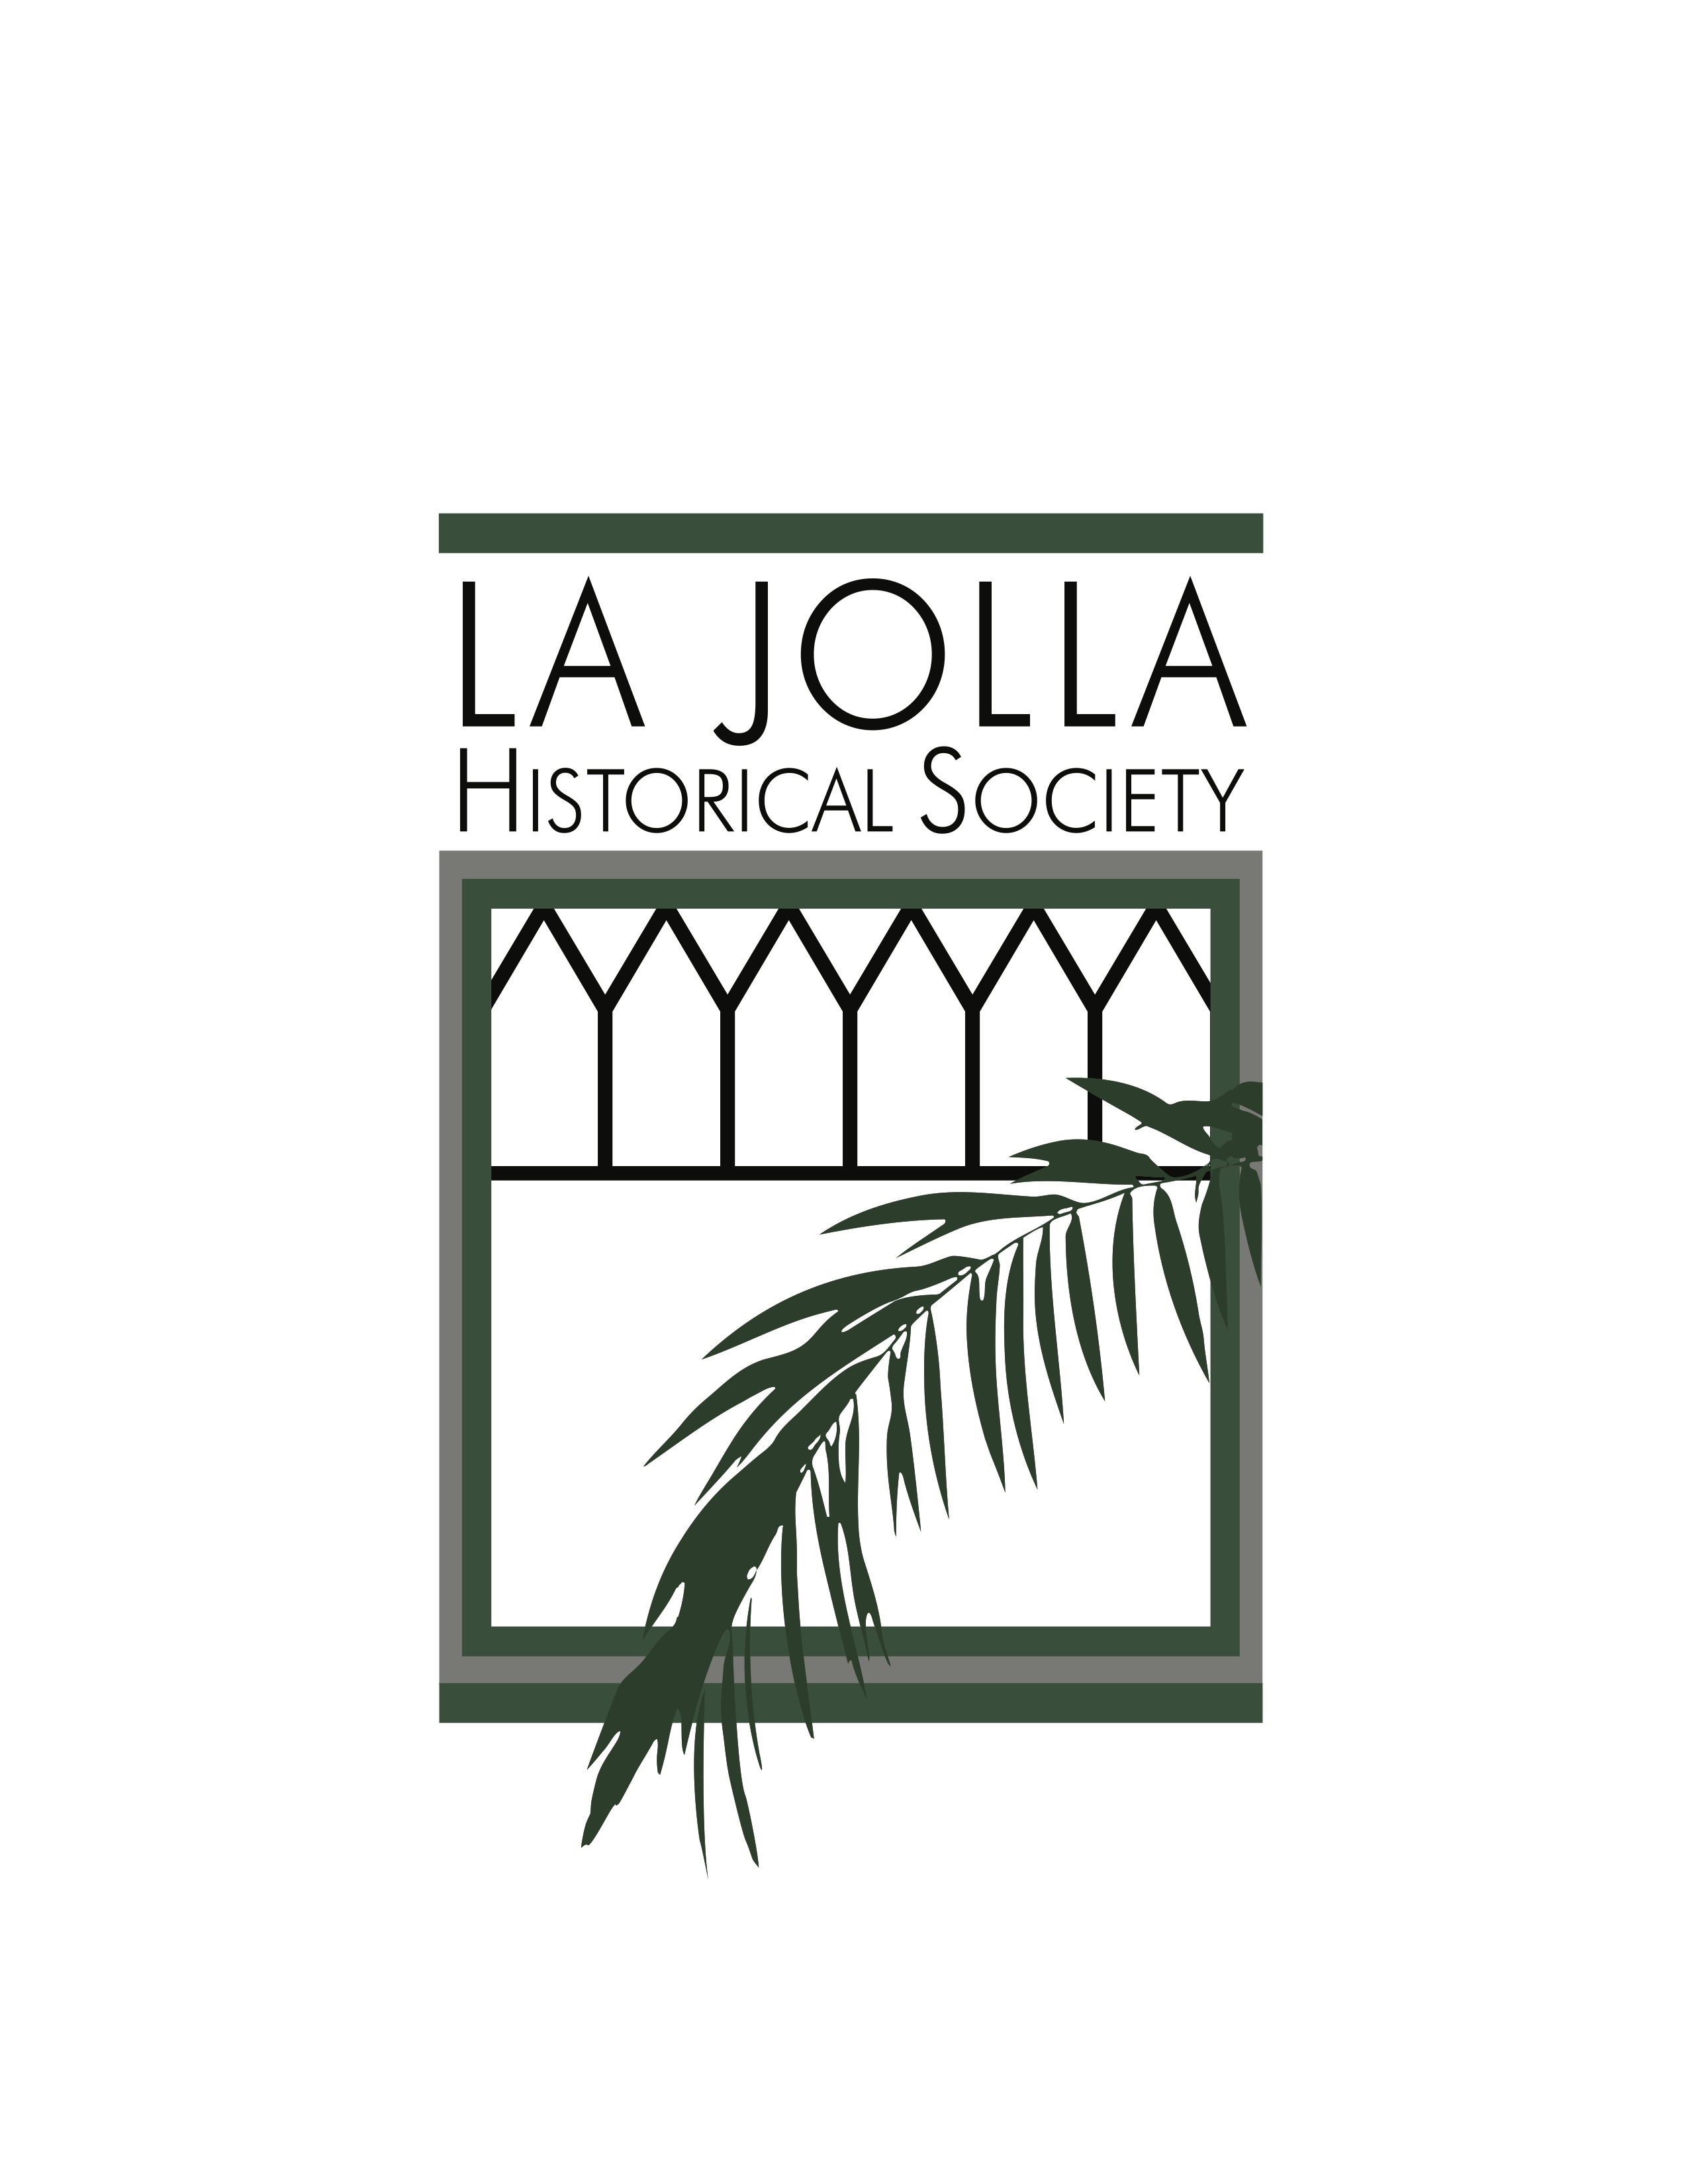 La Jolla Historical Society logo